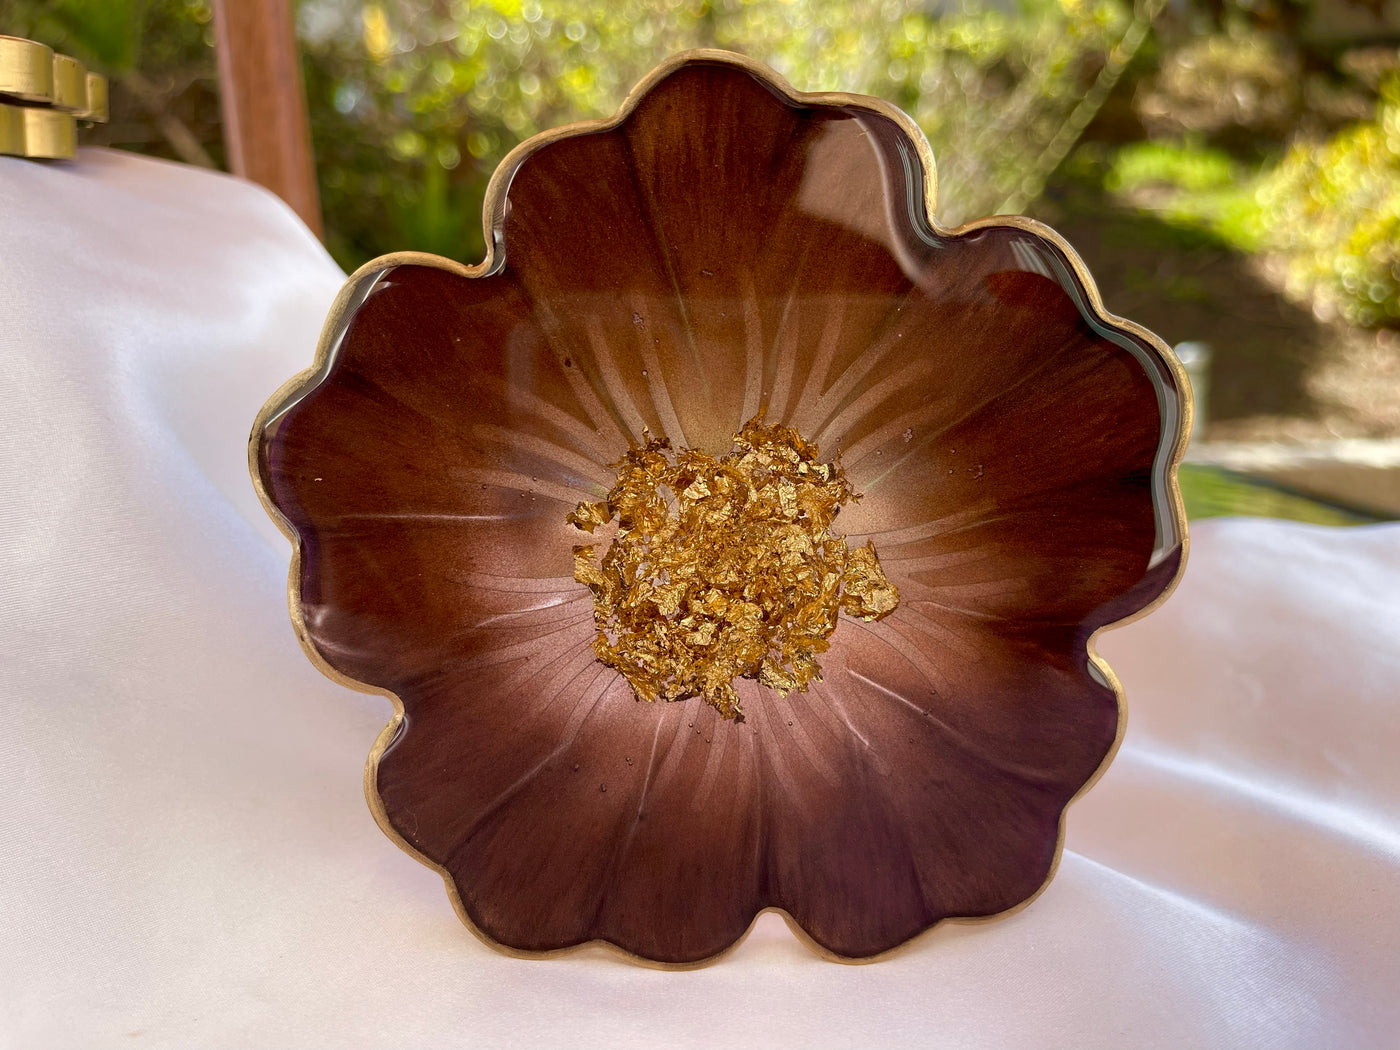 Handmade Chocolate Brown Mocha and Gold Resin Flower Shaped Coasters Set - Jasmin Renee Art - Single Coaster Standing Up Gold Rim Edges